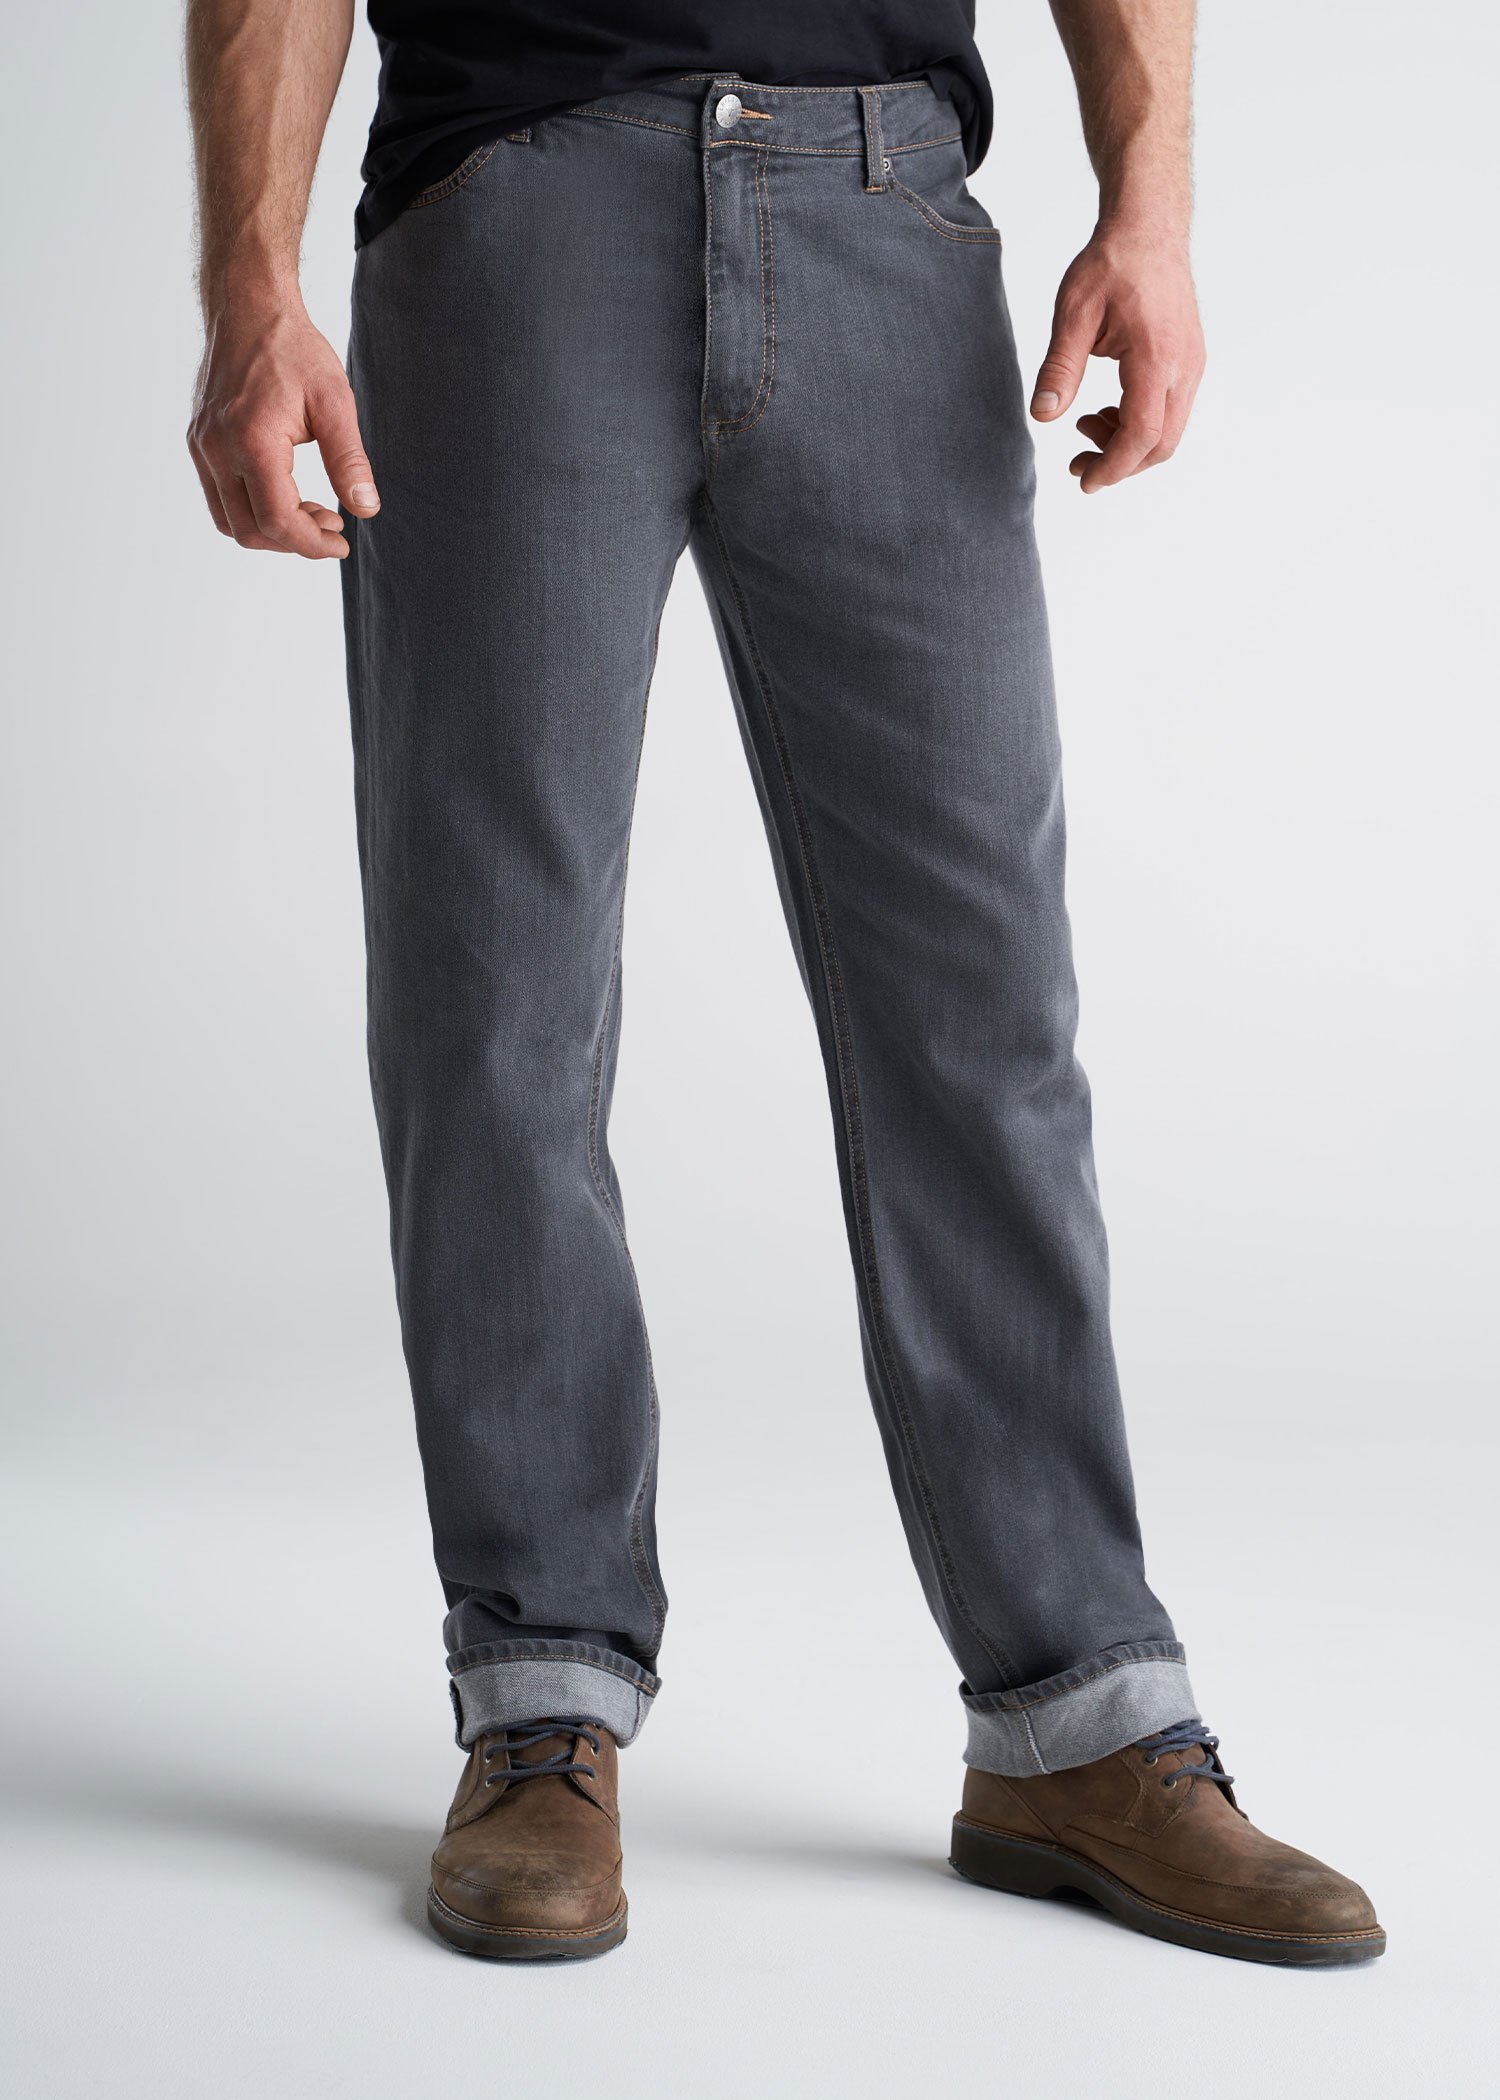 J1 STRAIGHT-LEG Tall Men's Jeans in Grey